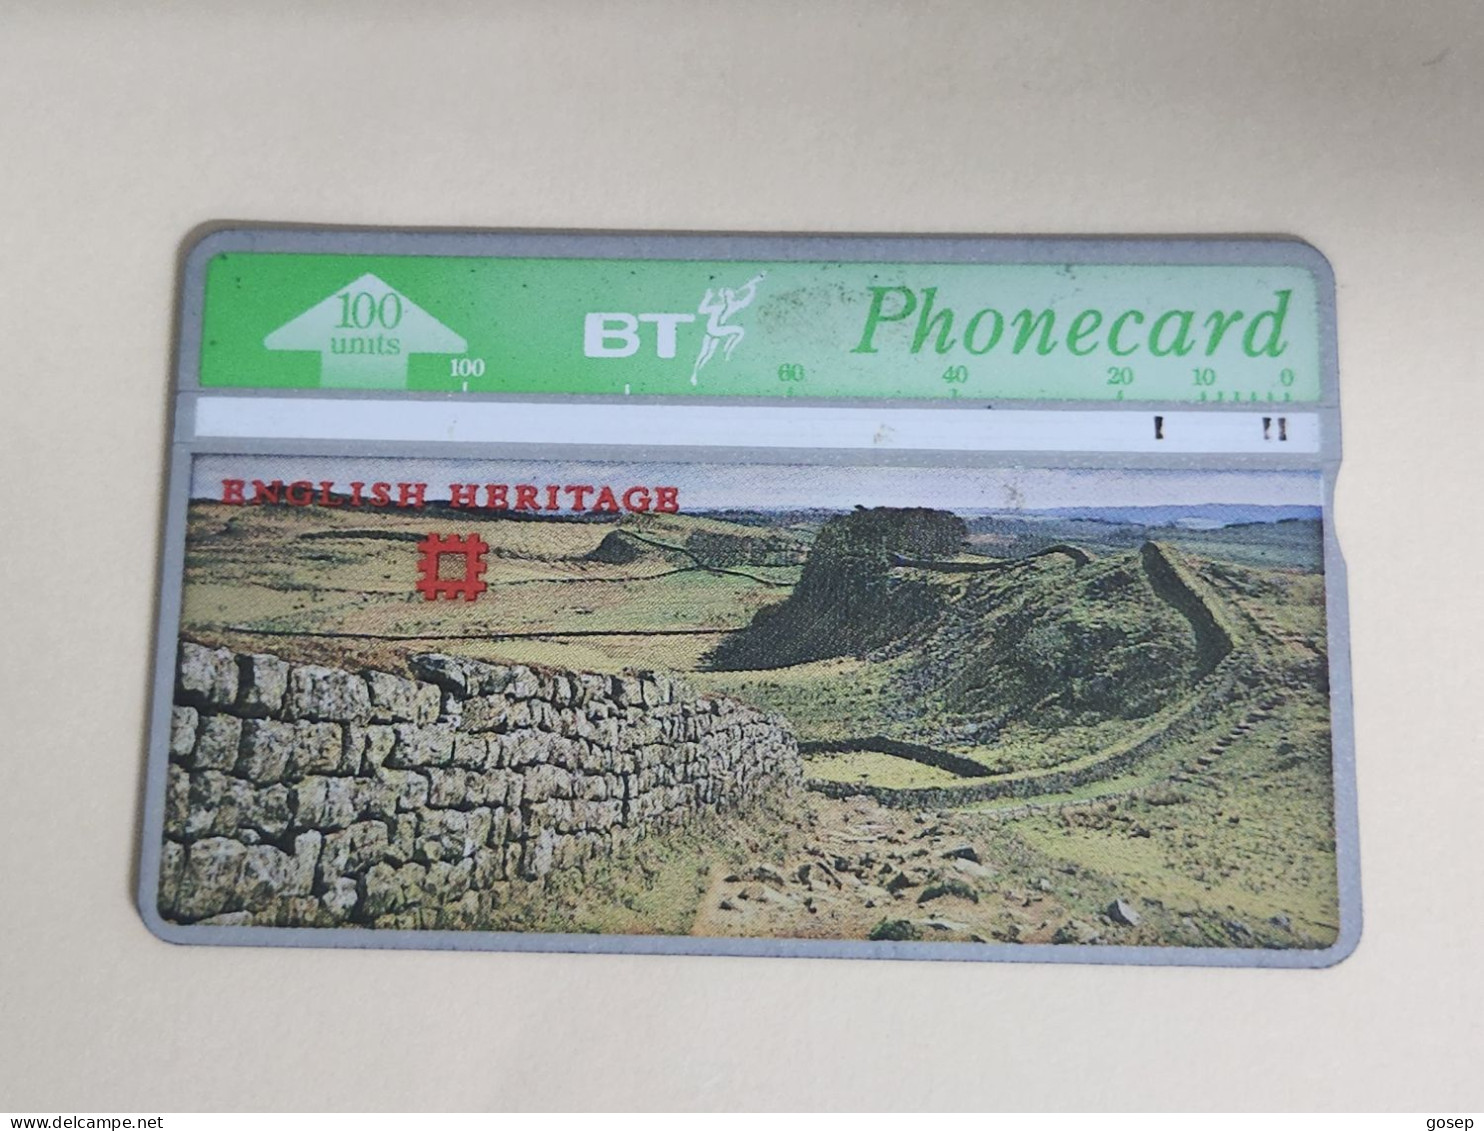 United Kingdom-(BTA117)HERITAGE-Hadrian's Wall-(203)(100units)(527G24931)price Cataloge3.00£-used+1card Prepiad Free - BT Advertising Issues